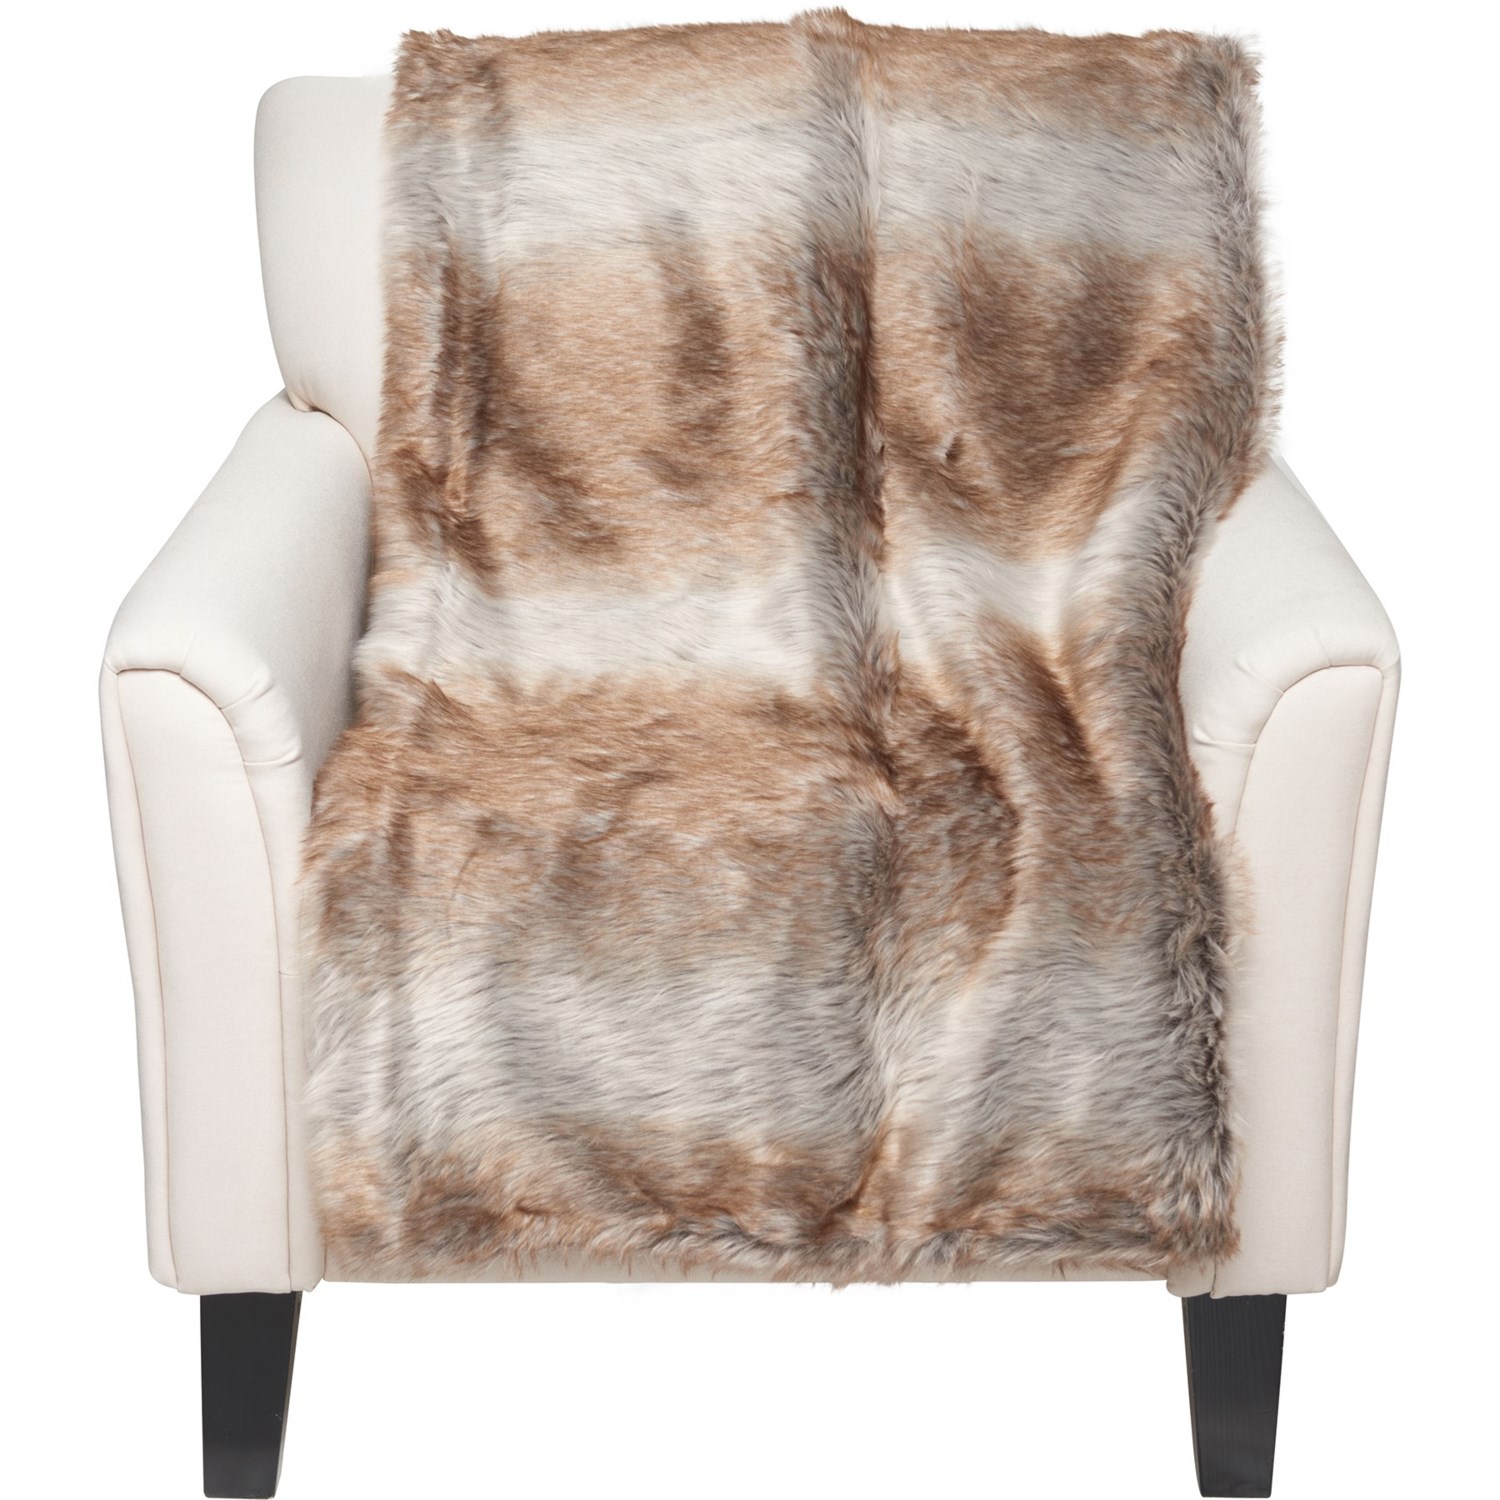 Aspen Patsy Faux-Fur Throw Blanket - 50x60”